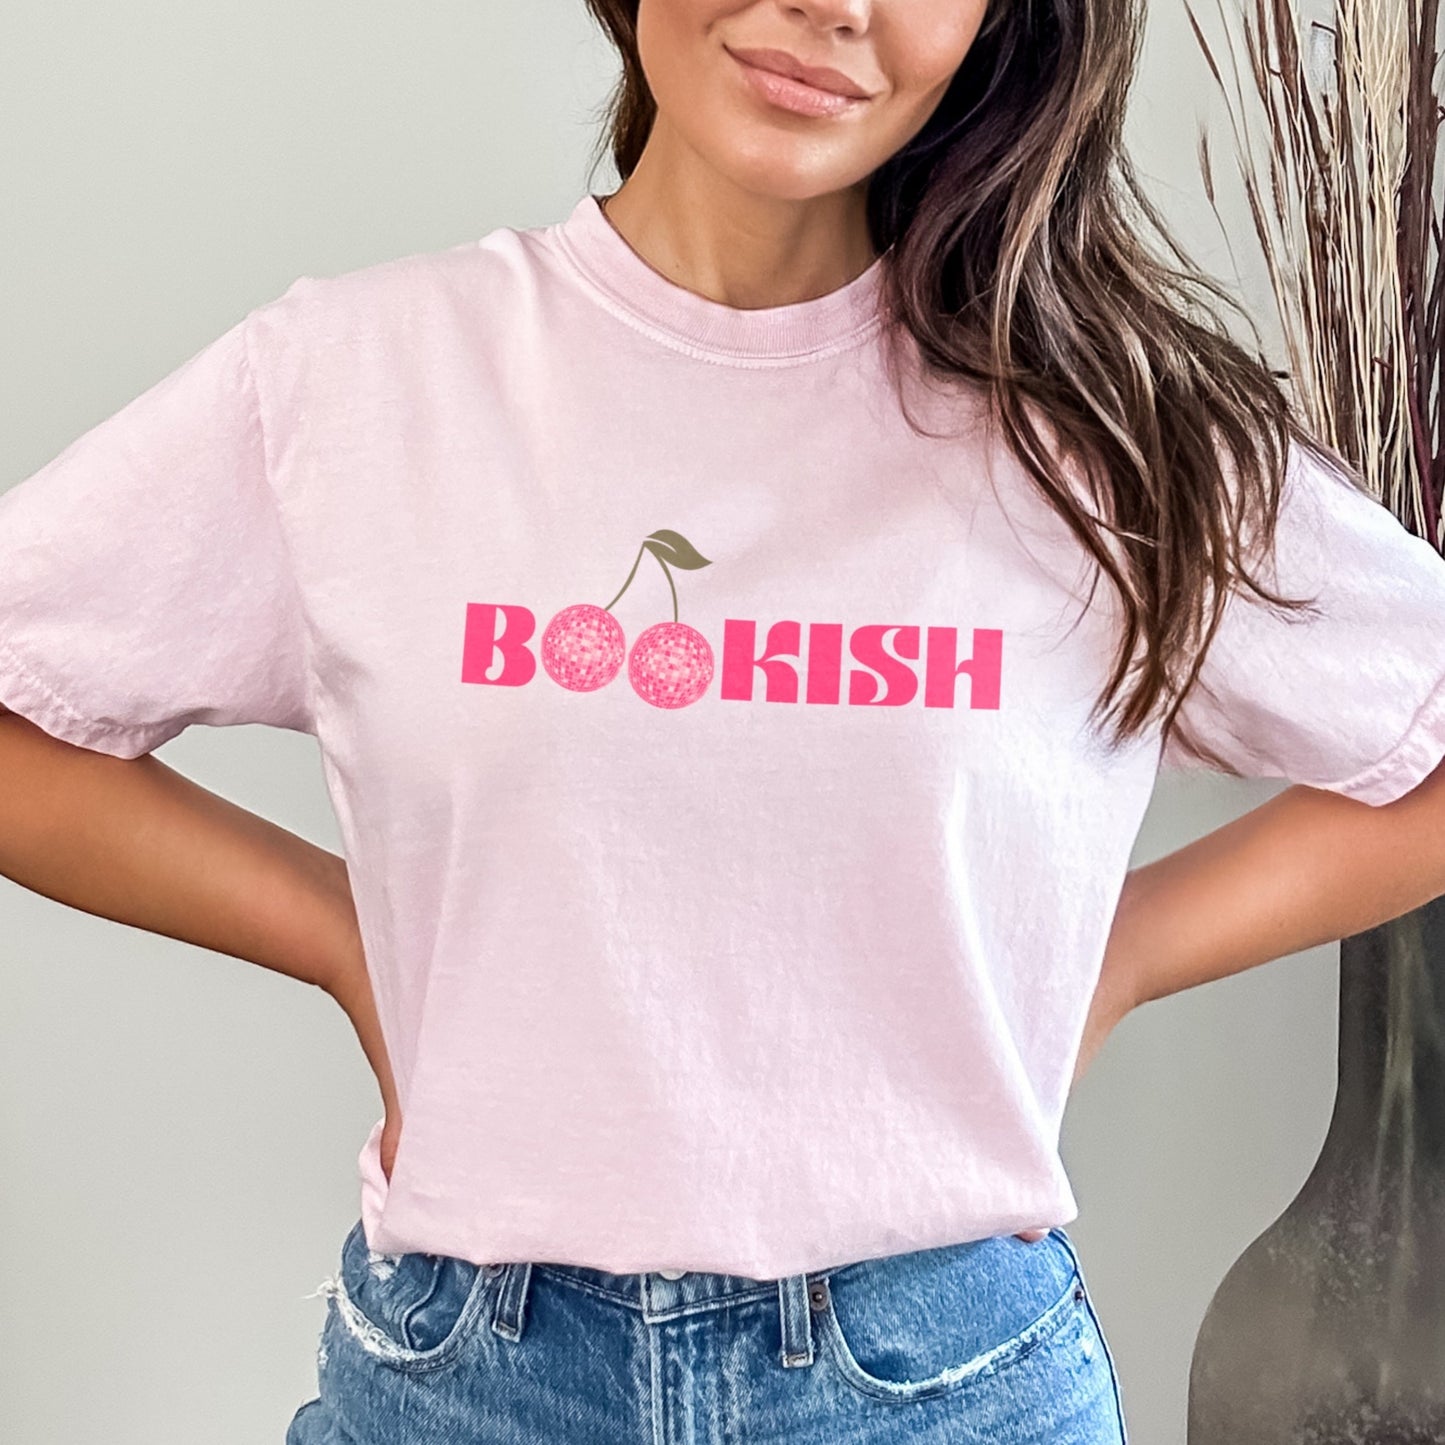 Pink Disco Ball Tee - Comfort Colors Retro Bookish Shirt